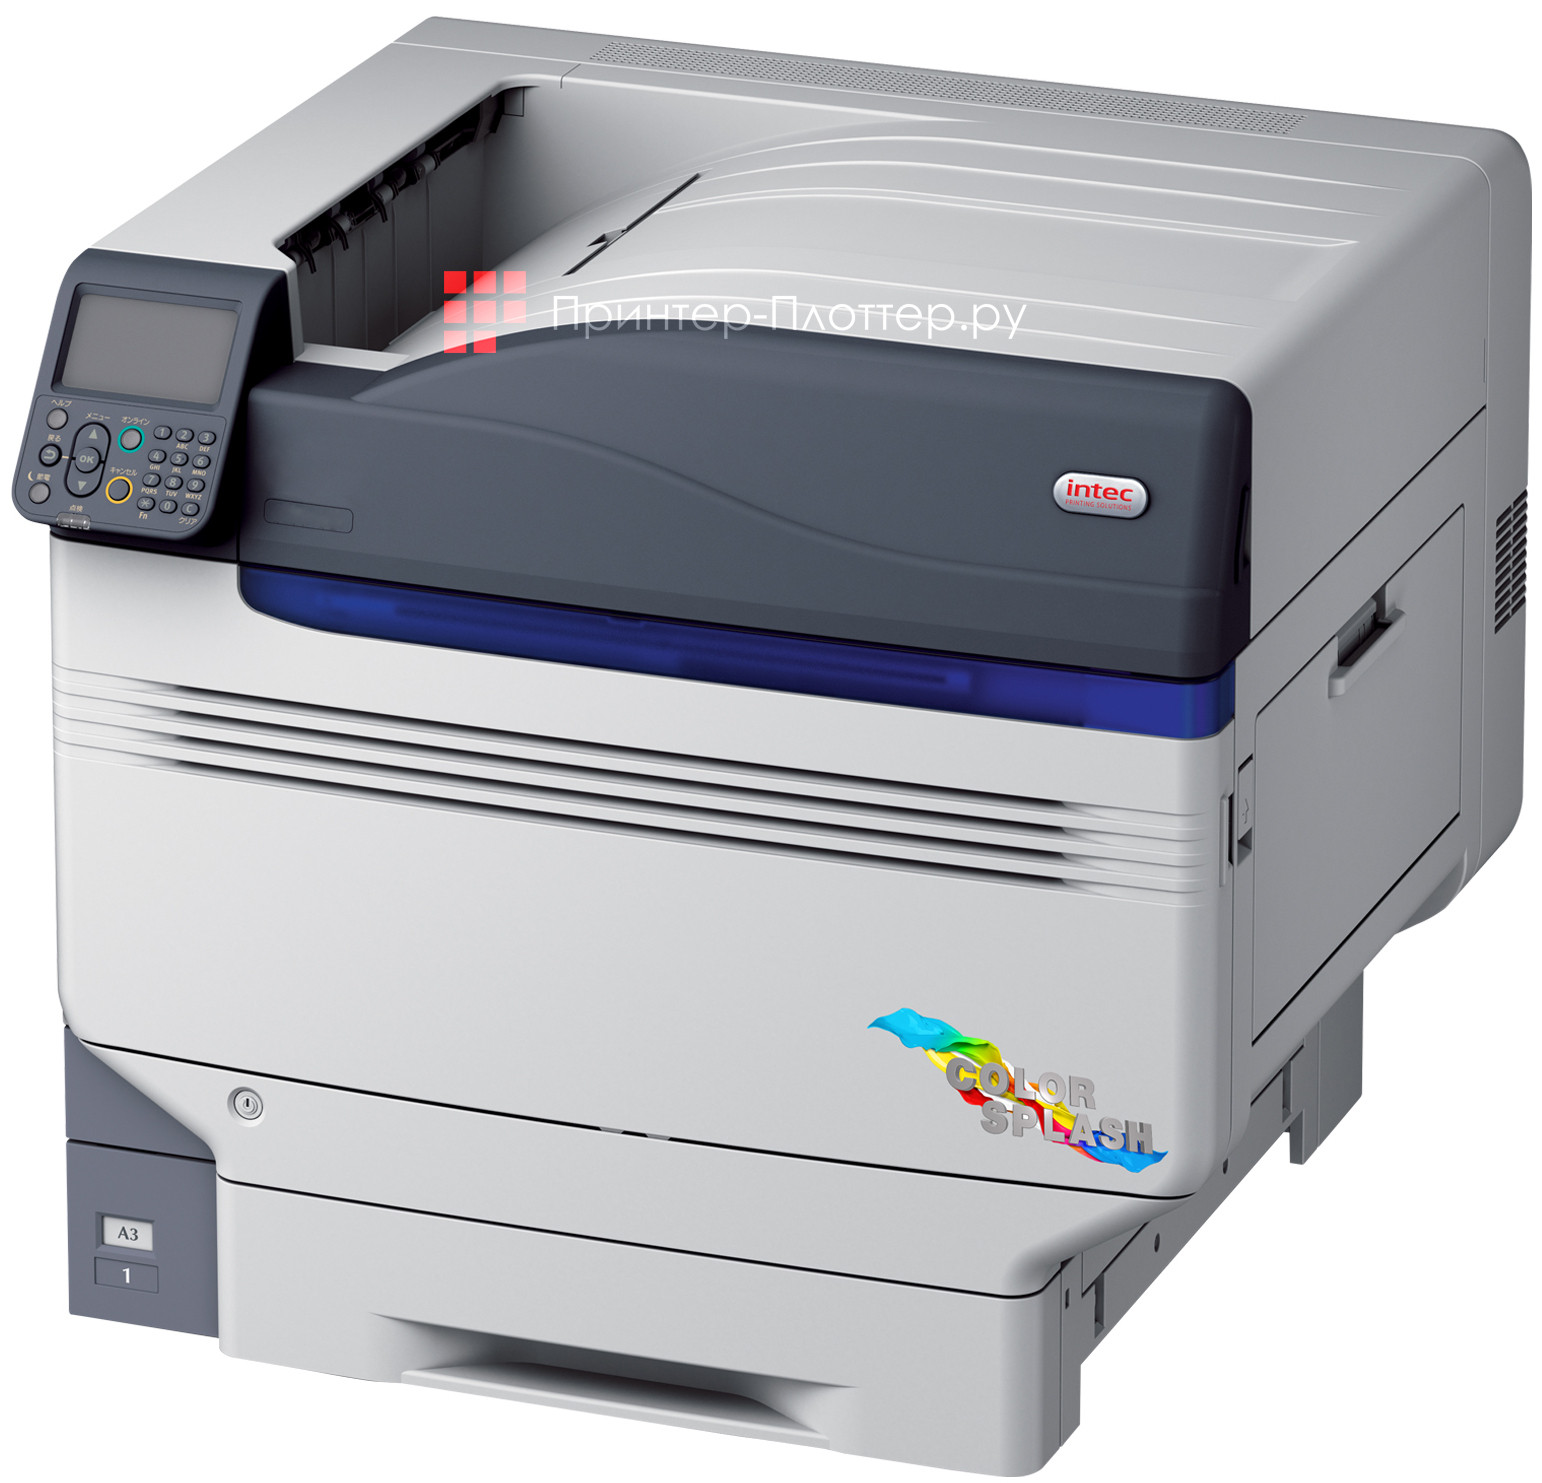 Laser print pc power source